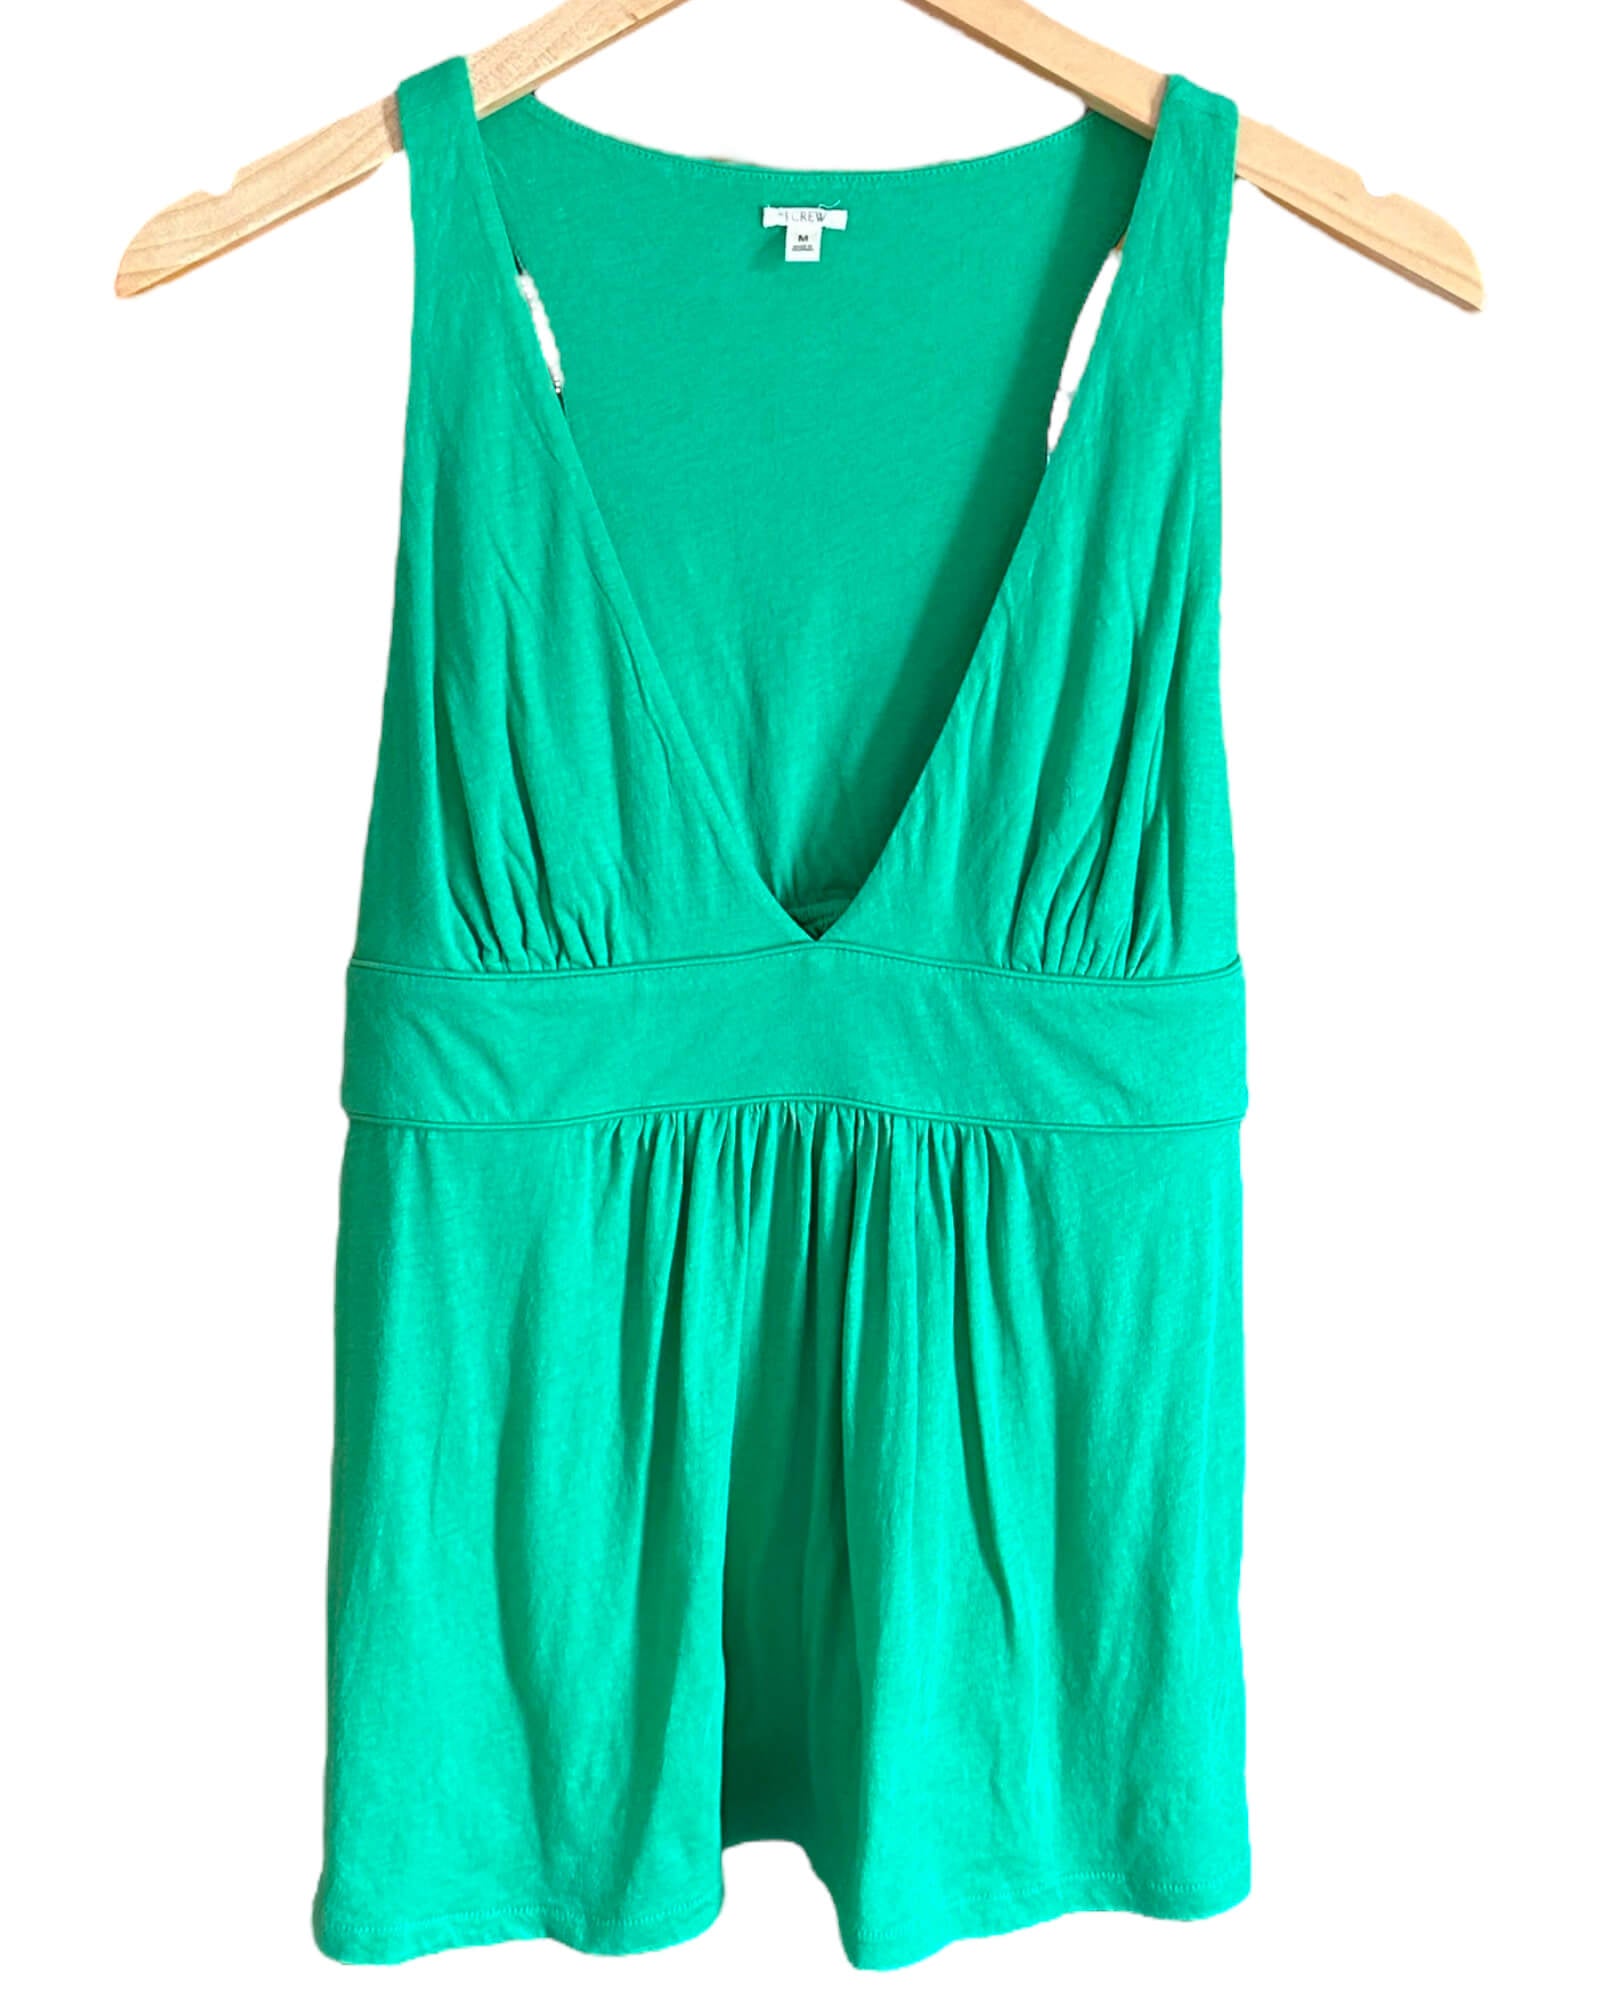 Light Spring J.CREW sleeveless deep-v shamrock green top